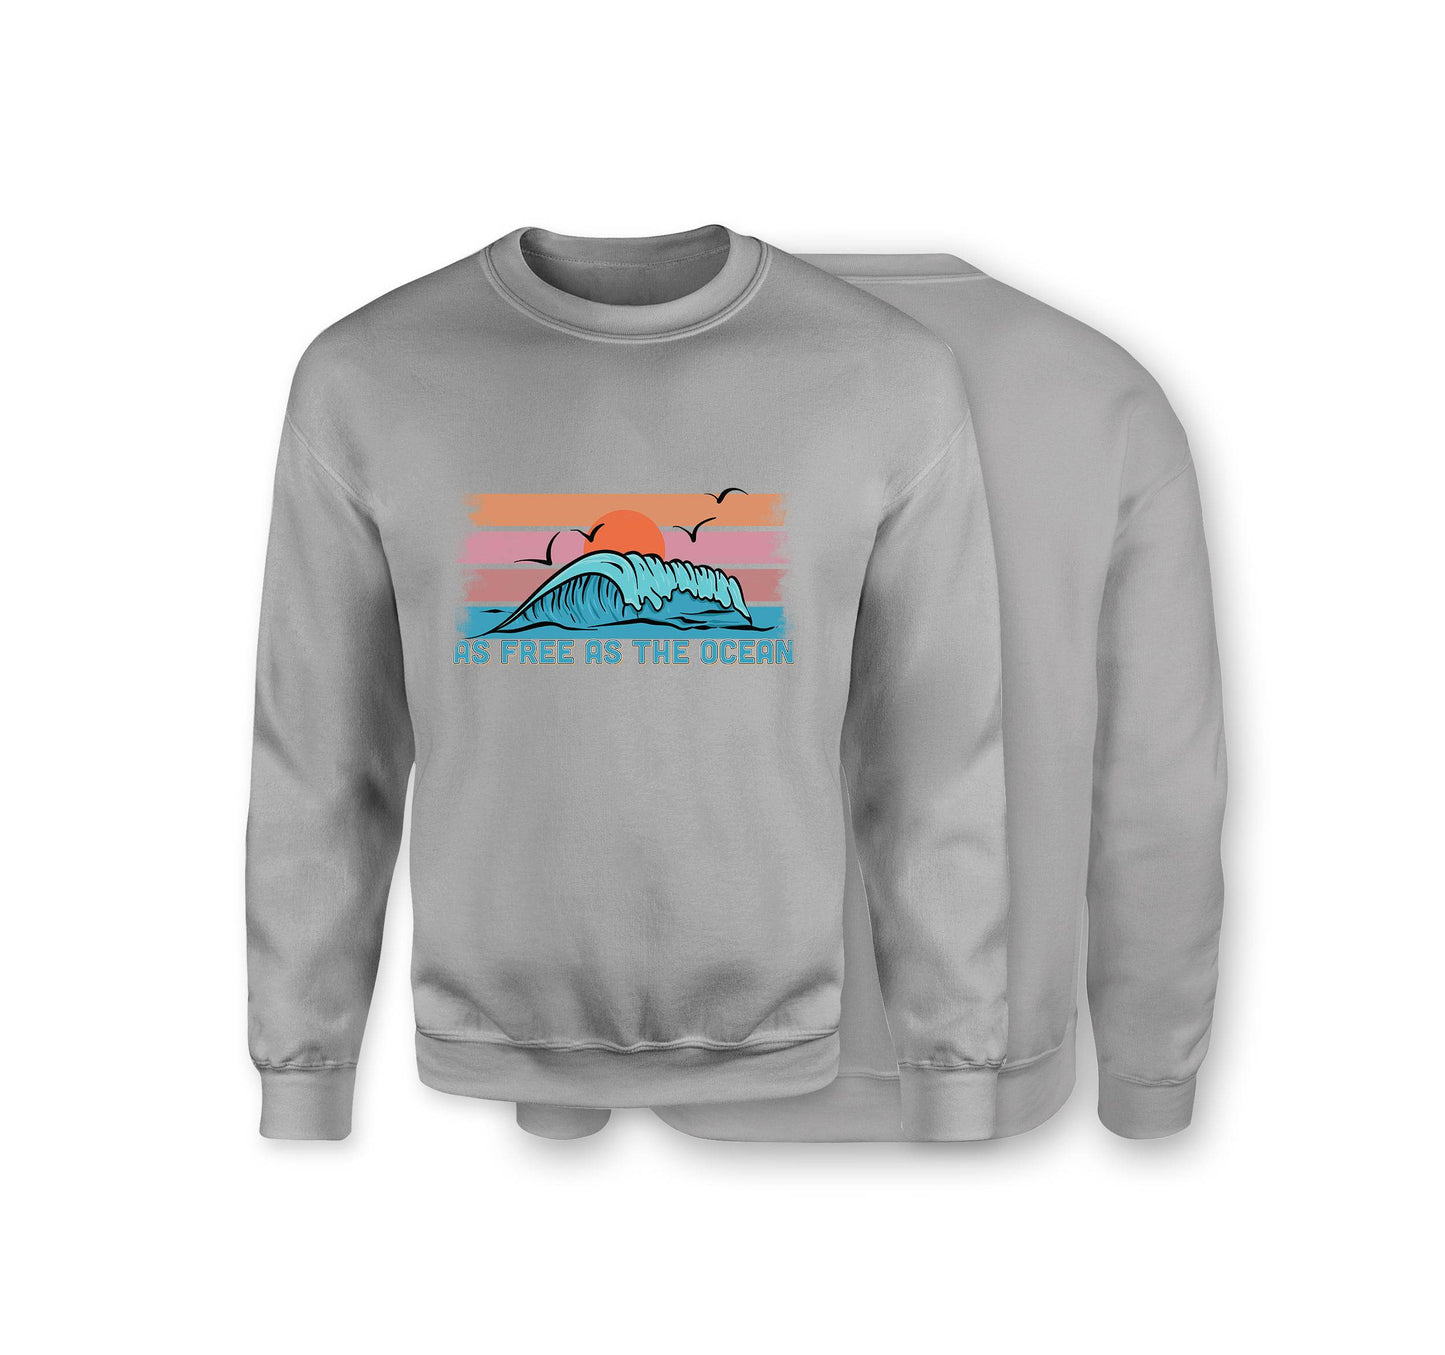 As Free As The Ocean Sweatshirt - Organic Cotton Sweatshirt - Front Print - One Choice Apparel